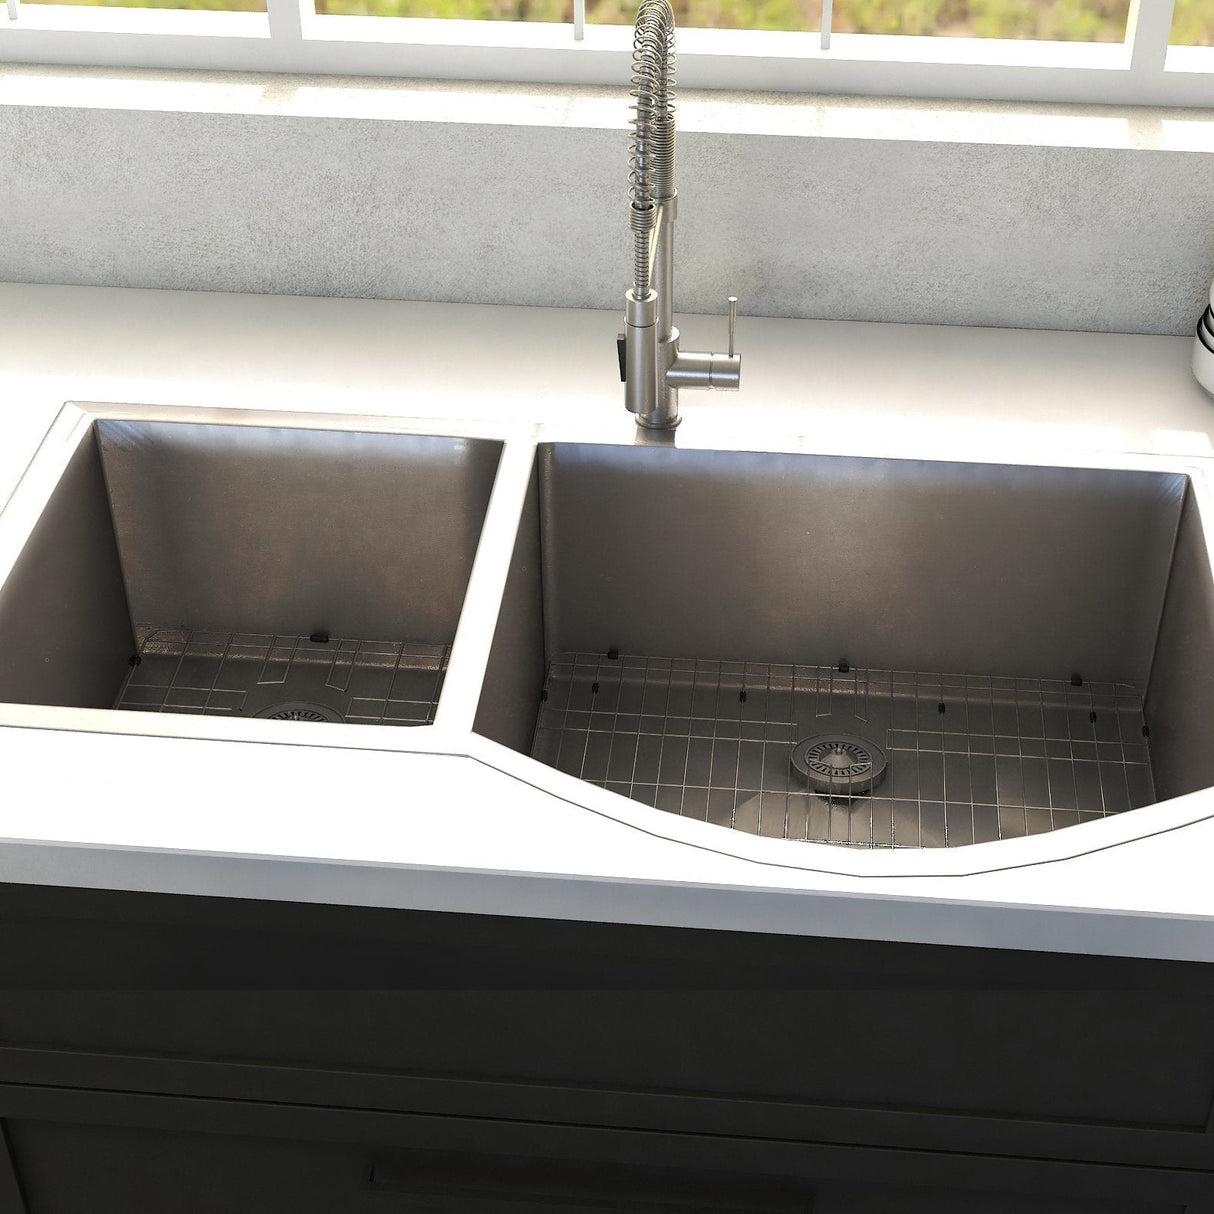 ZLINE 33 in. Cortina Undermount Double Bowl Kitchen Sink with Bottom Grid (SC70D-33)